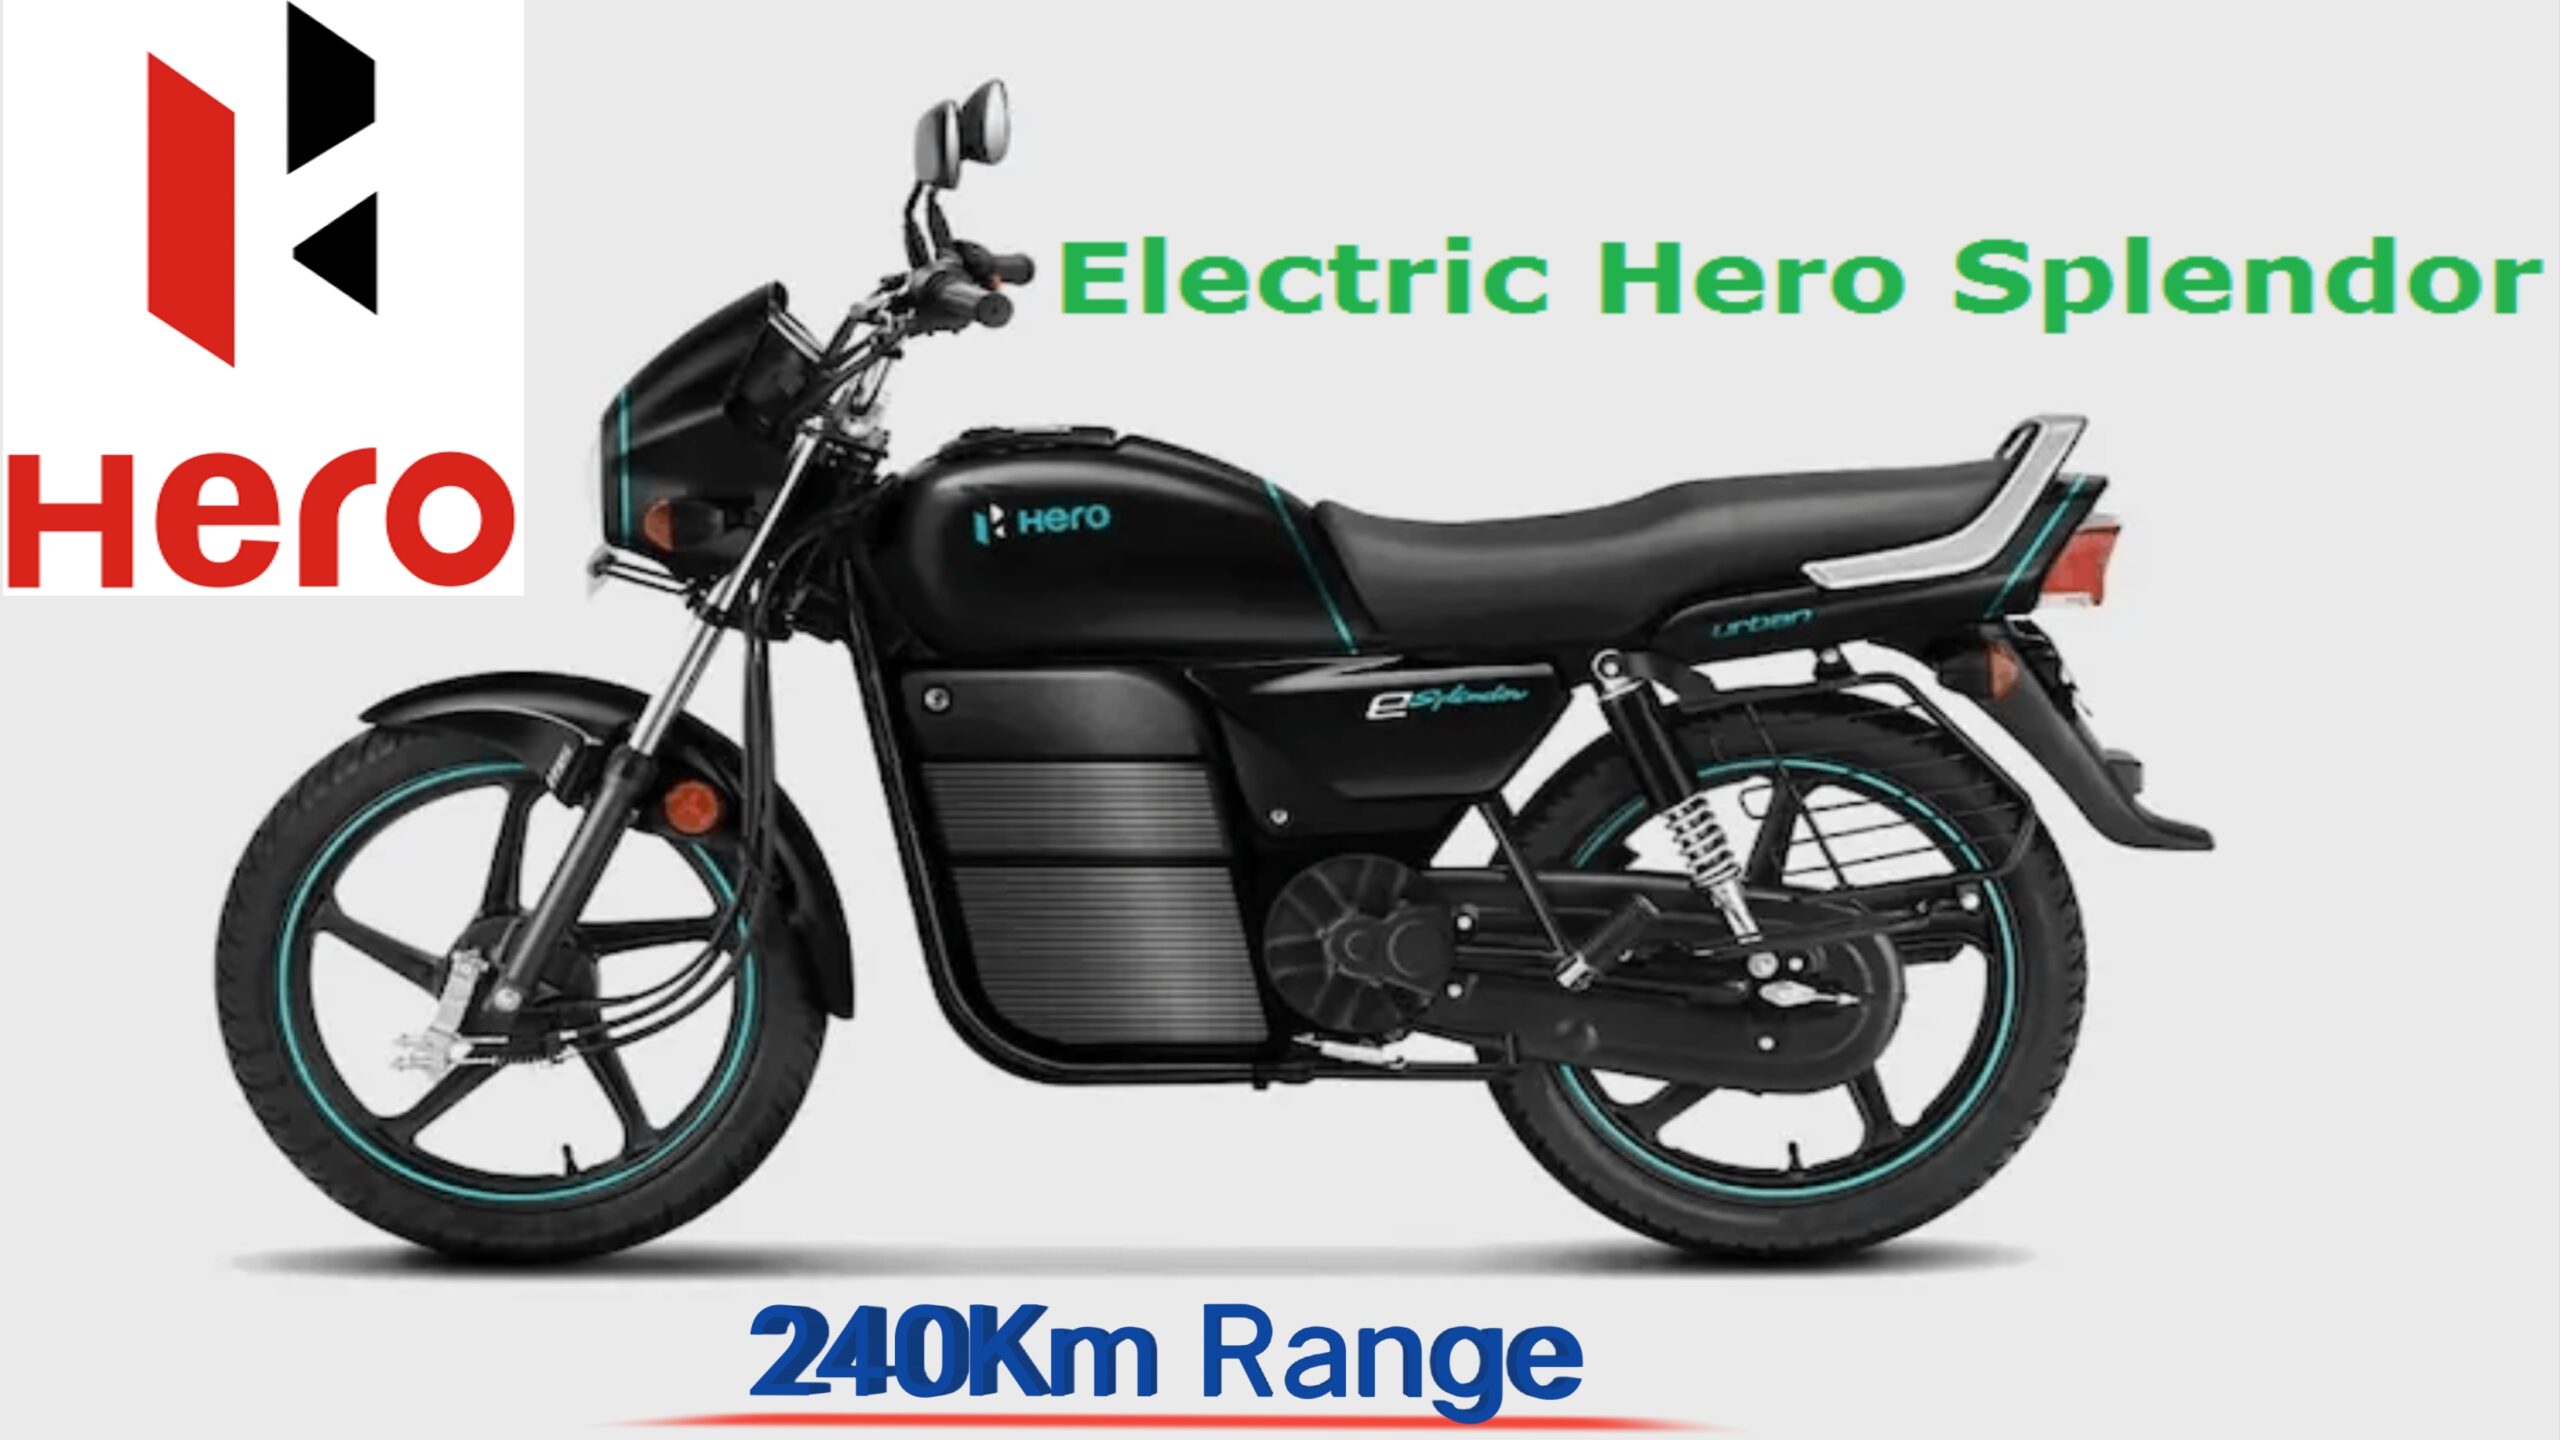 Hero Splendor Electric Bike